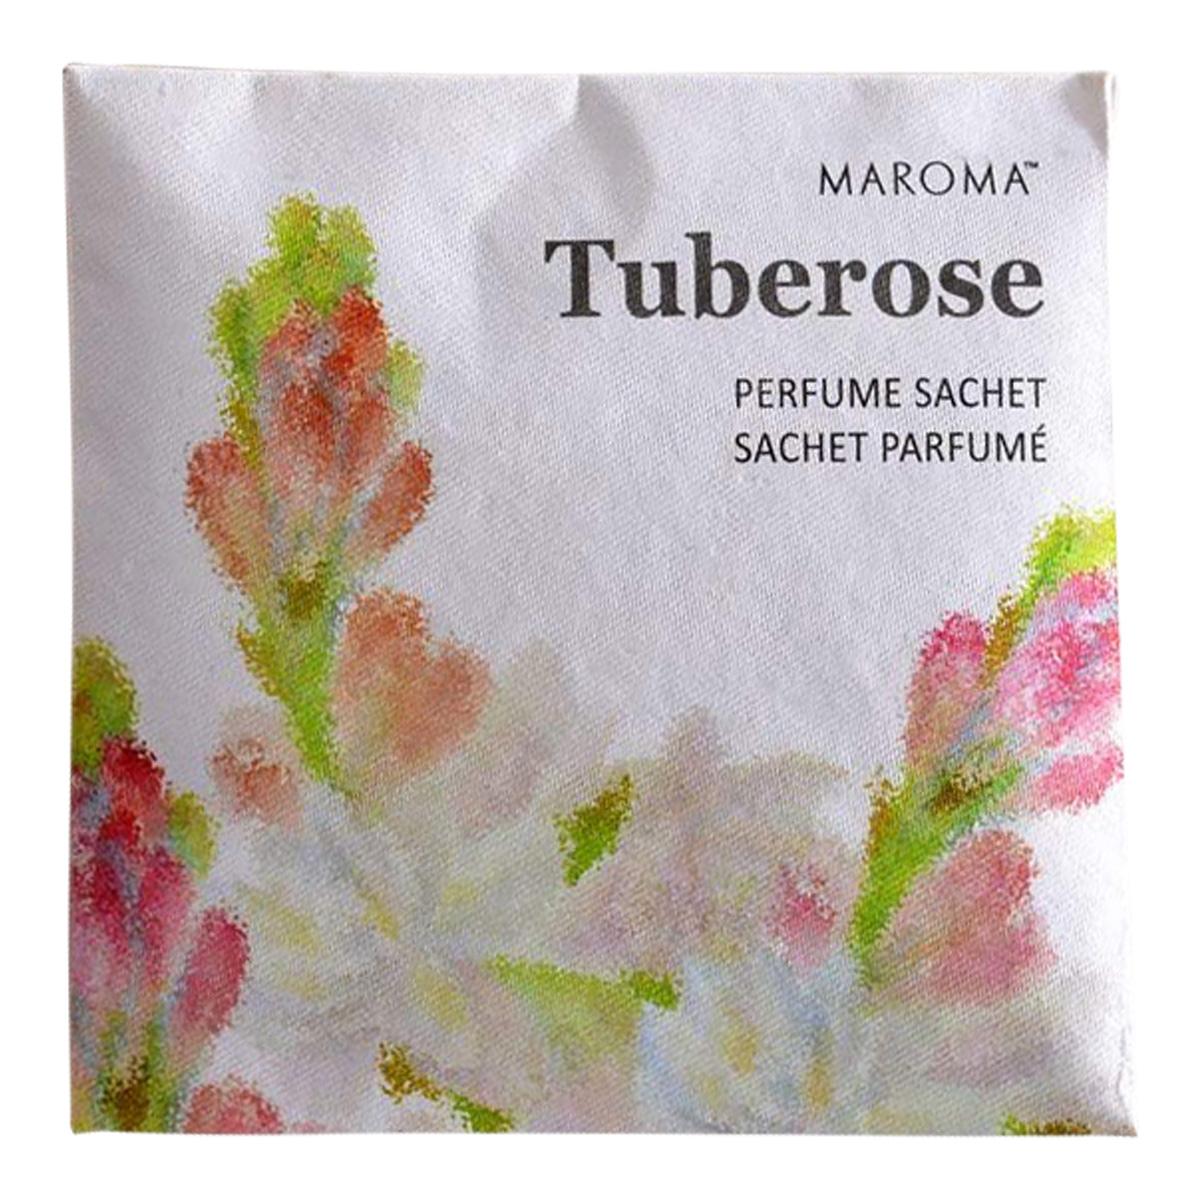 Primary image of Flower Sachet - Tuberose